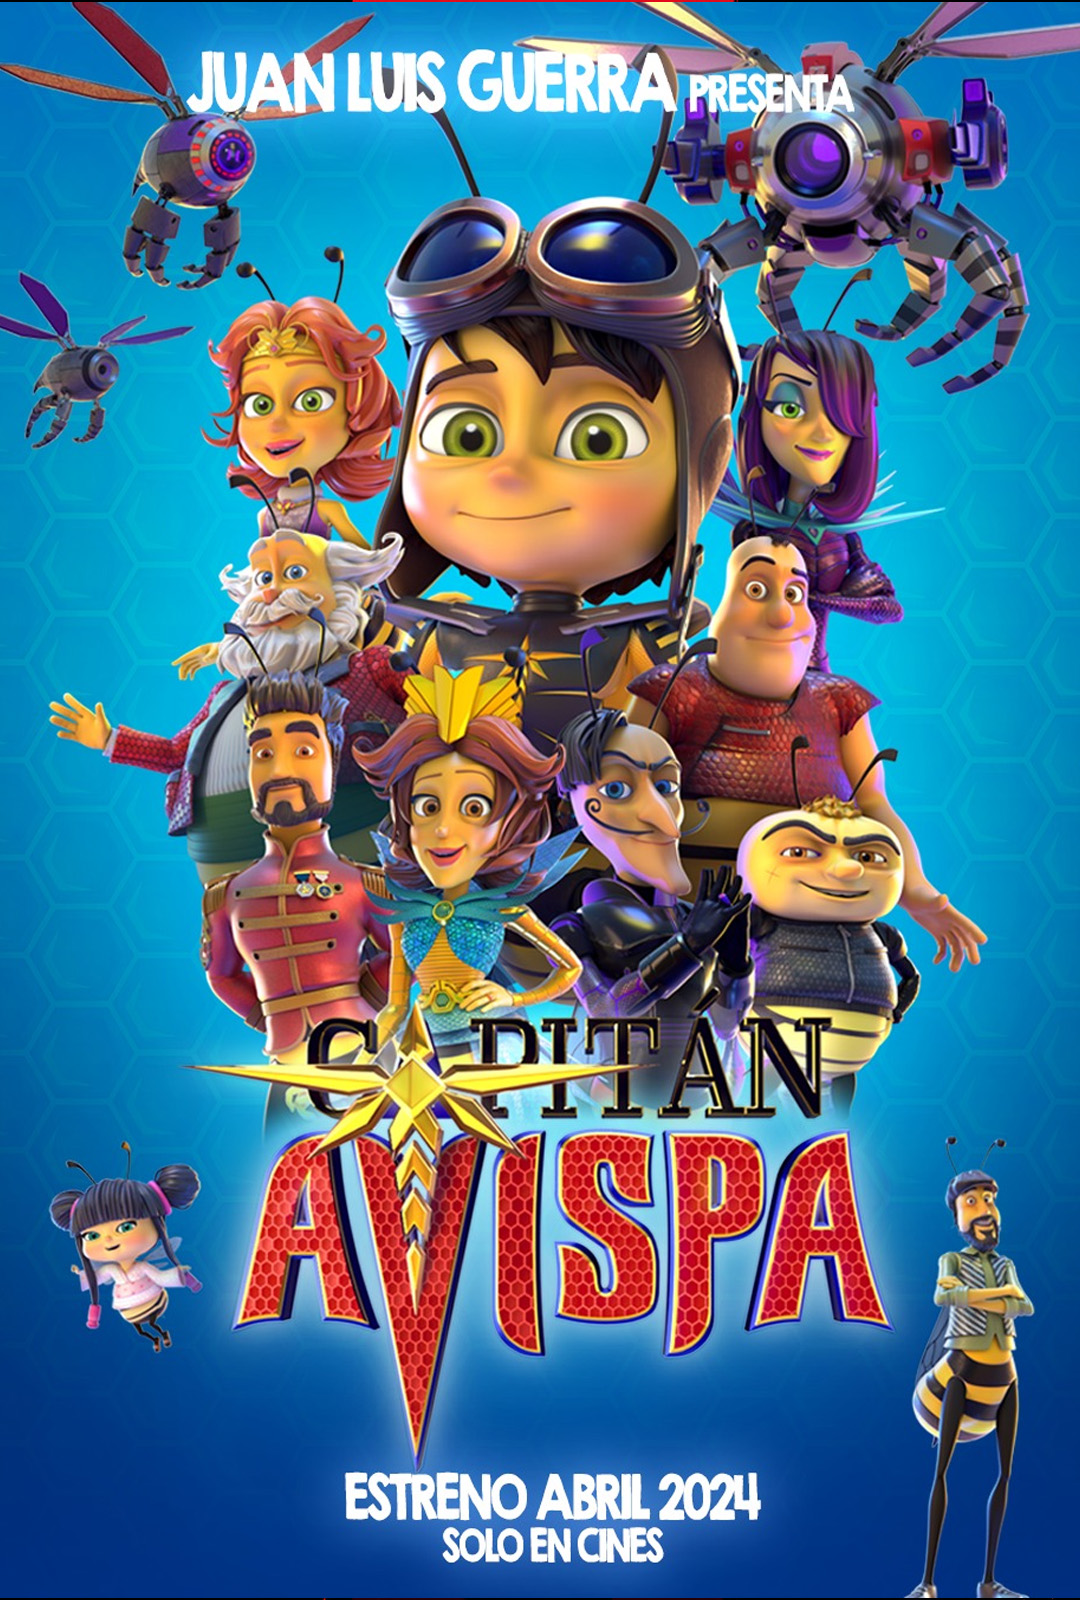 Movie Poster: Capitán Avispa